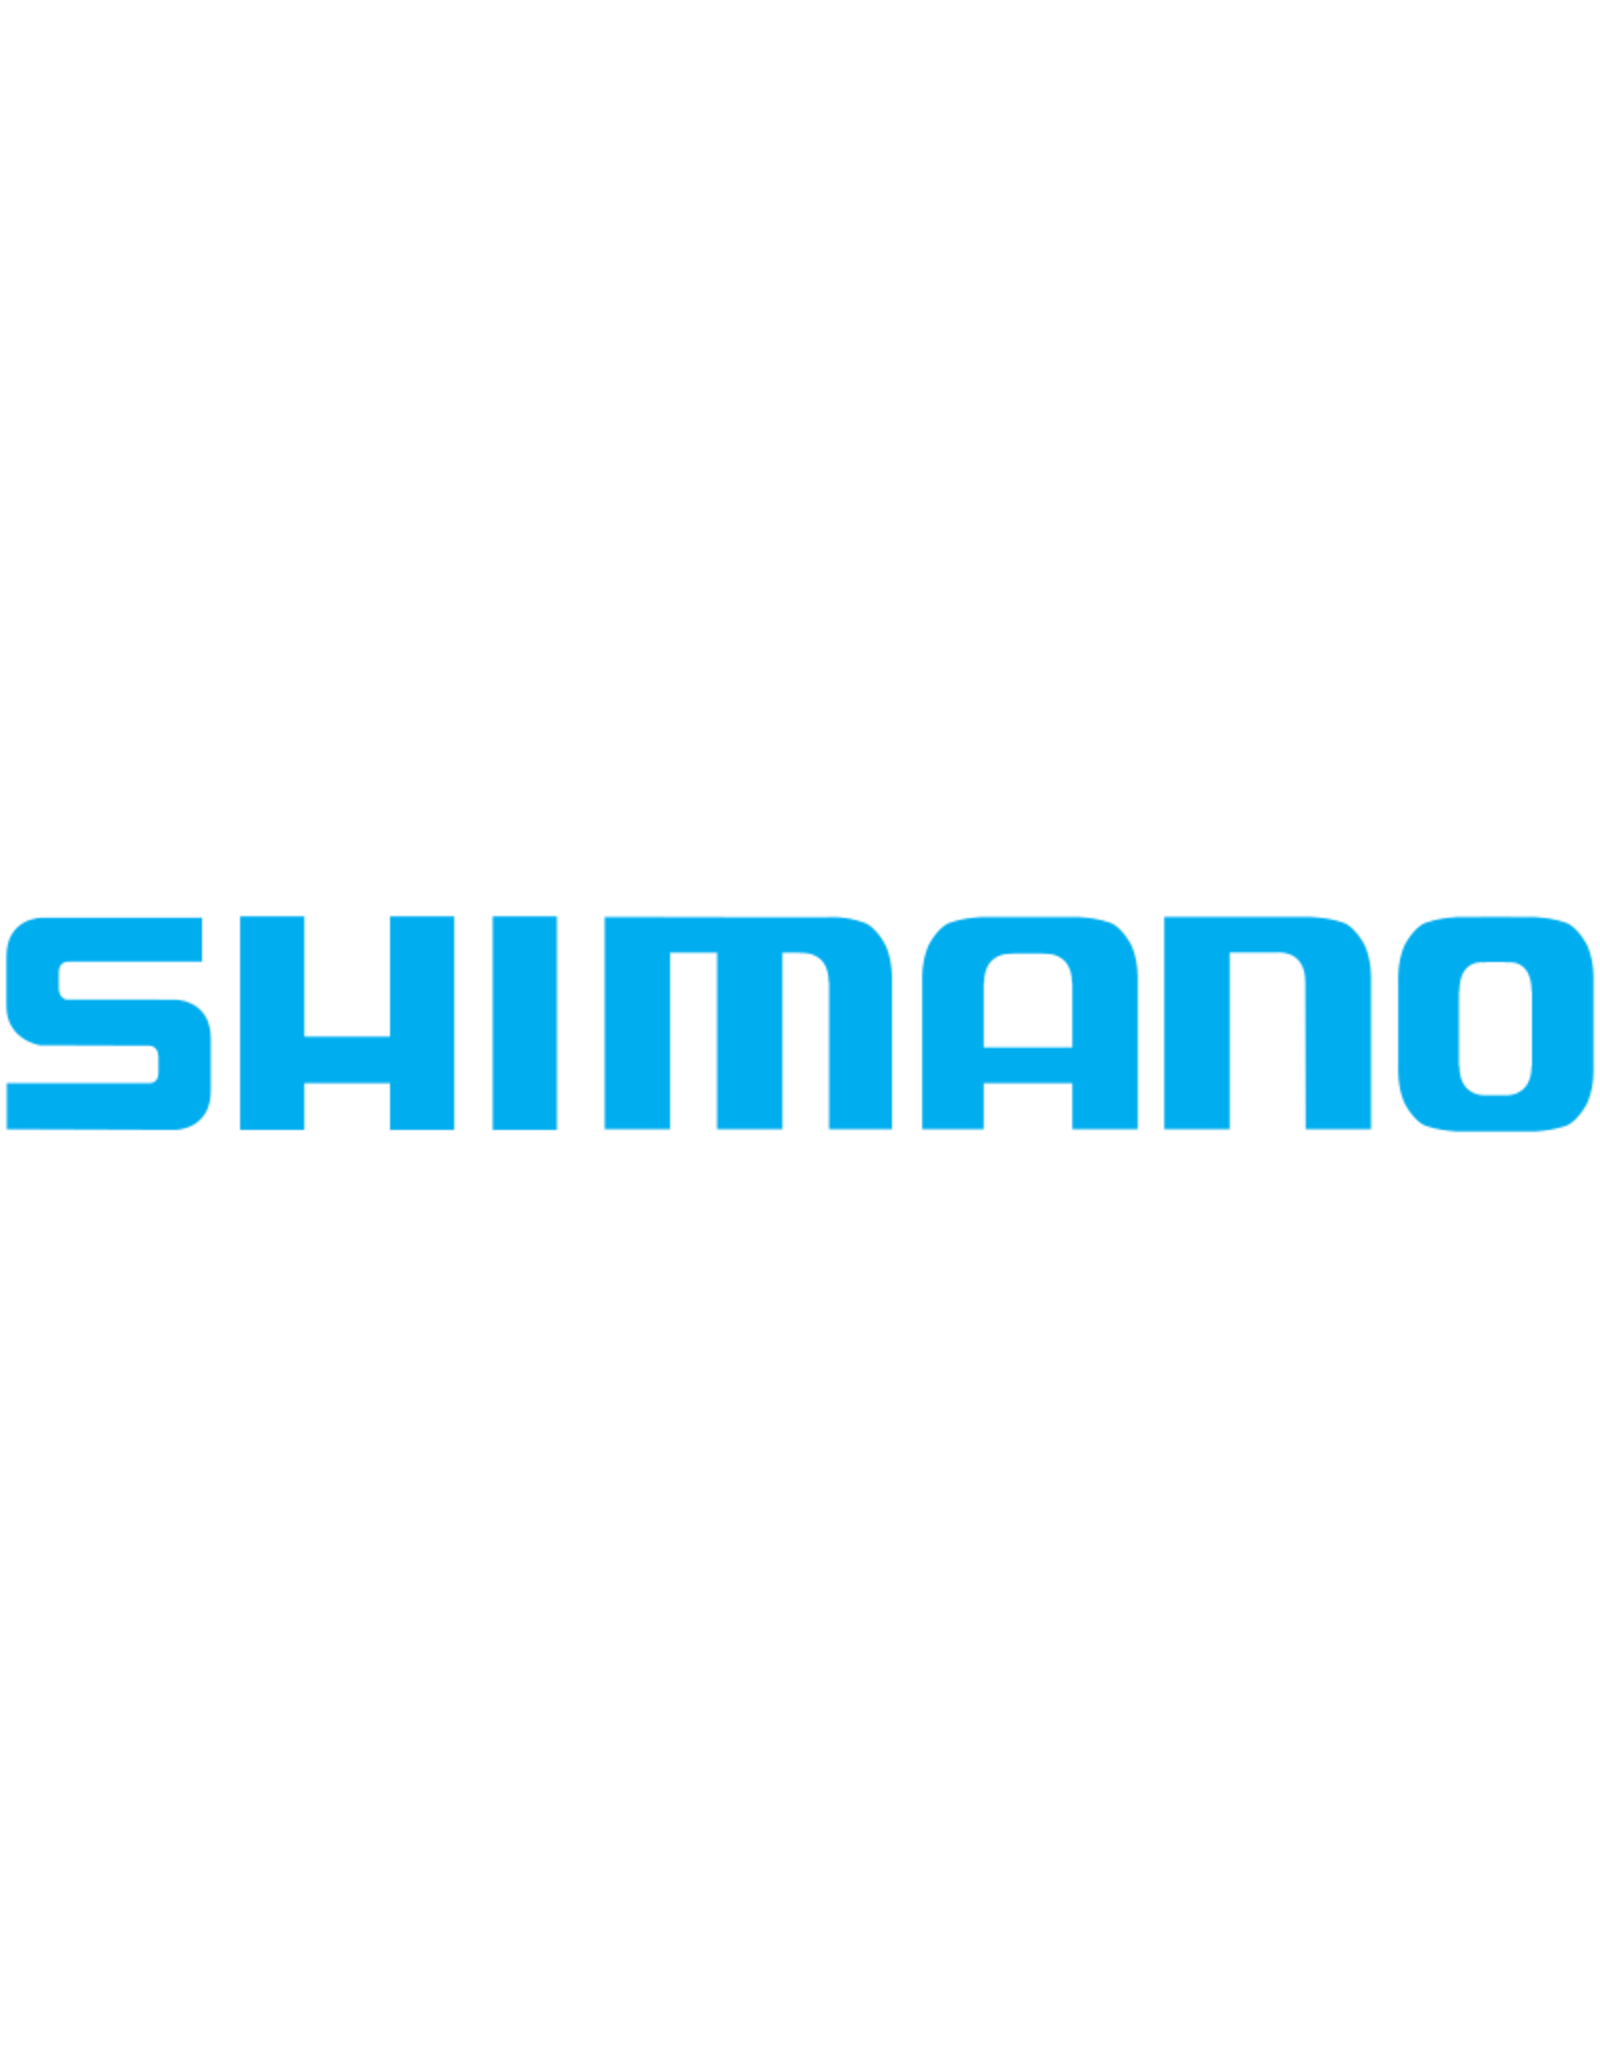 Shimano BNT2137  DRAG WASHER/ NLA